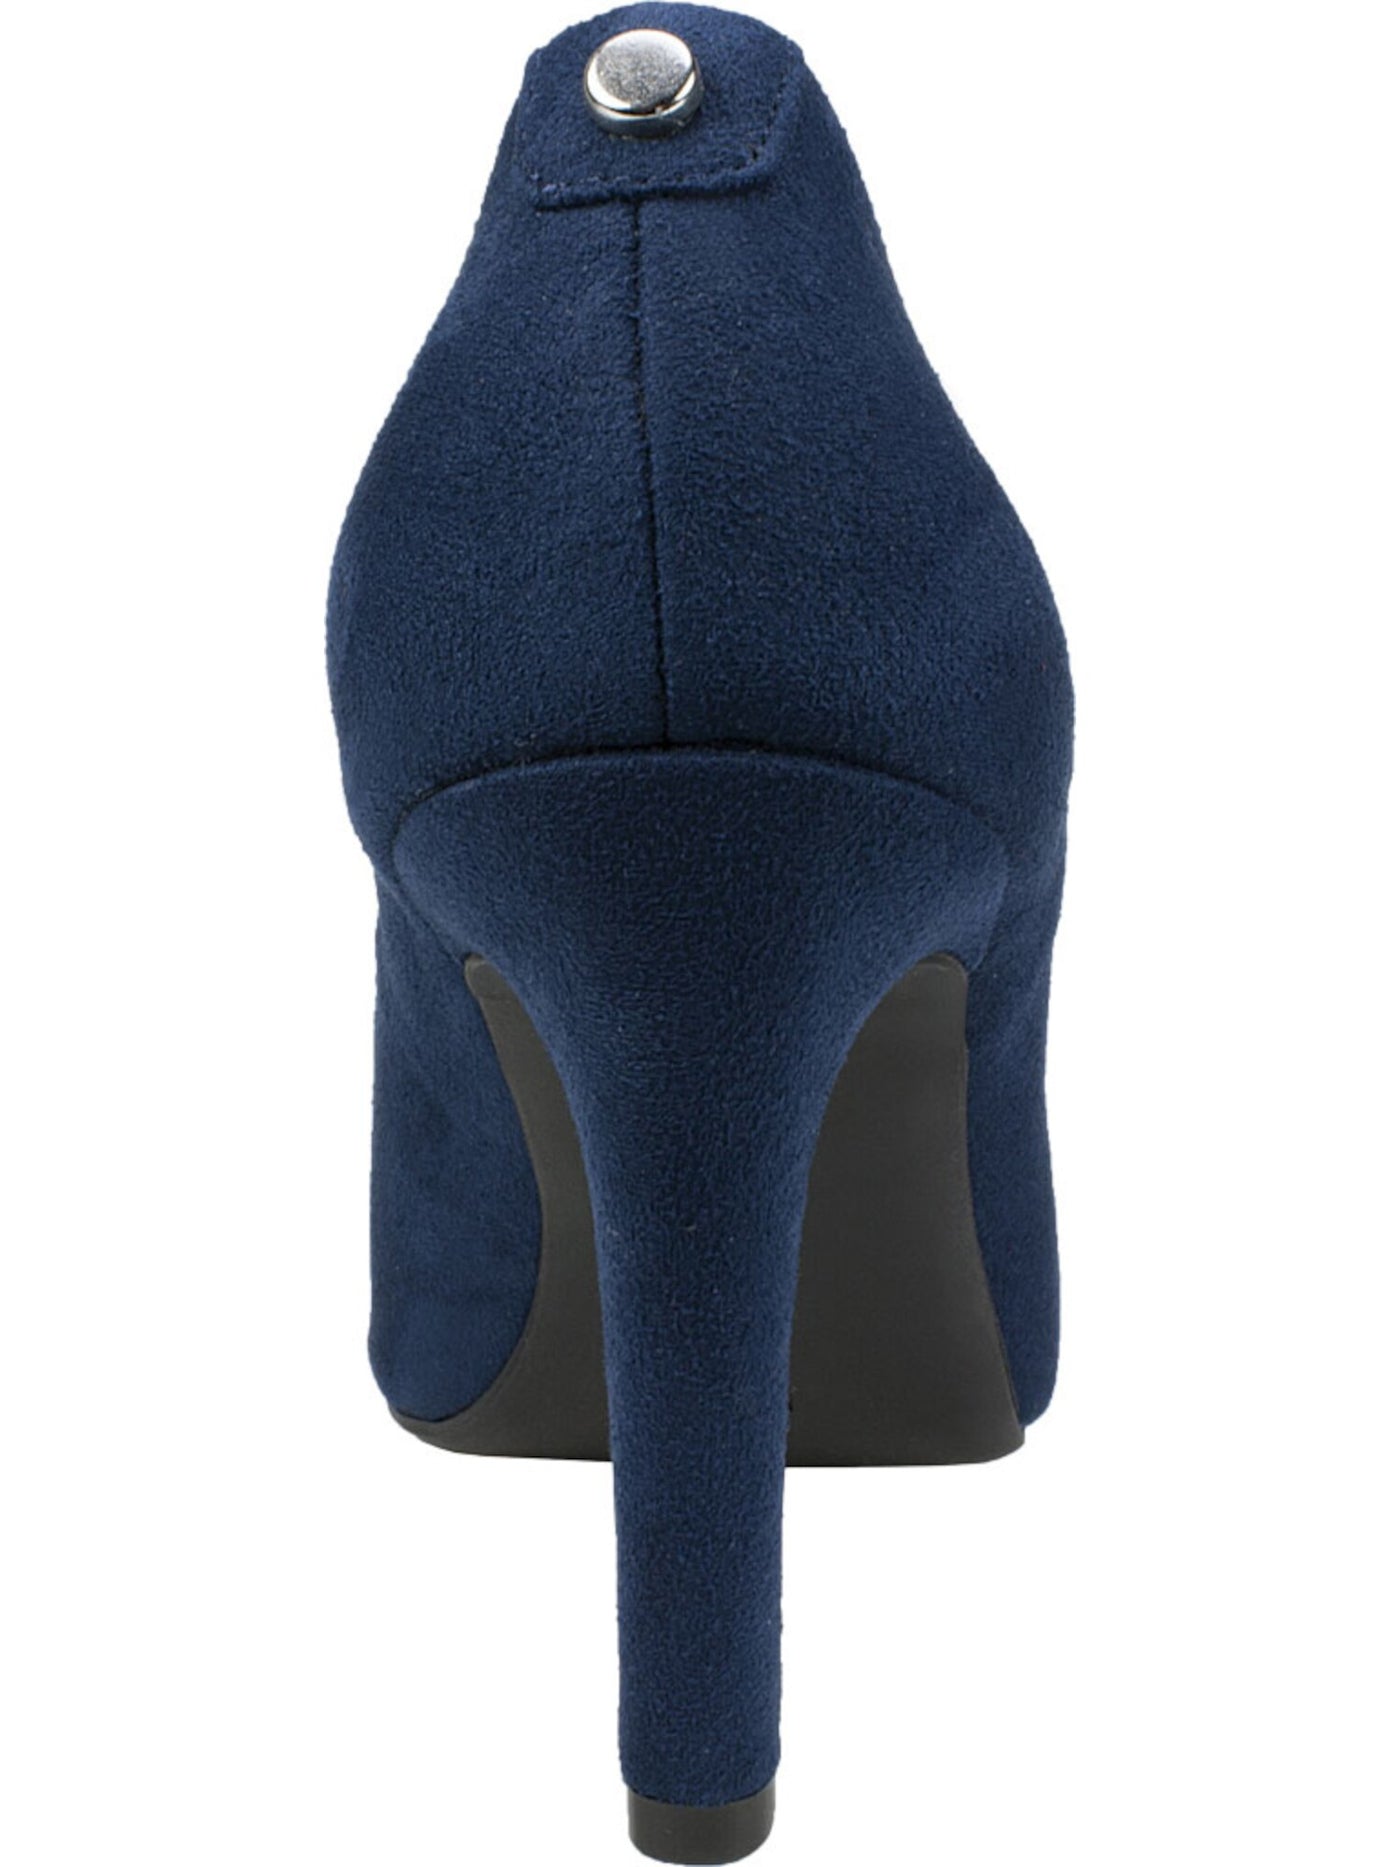 RIALTO Womens Blue Metallic Stud Padded Murphy Pointed Toe Stiletto Slip On Dress Pumps Shoes 6.5 M